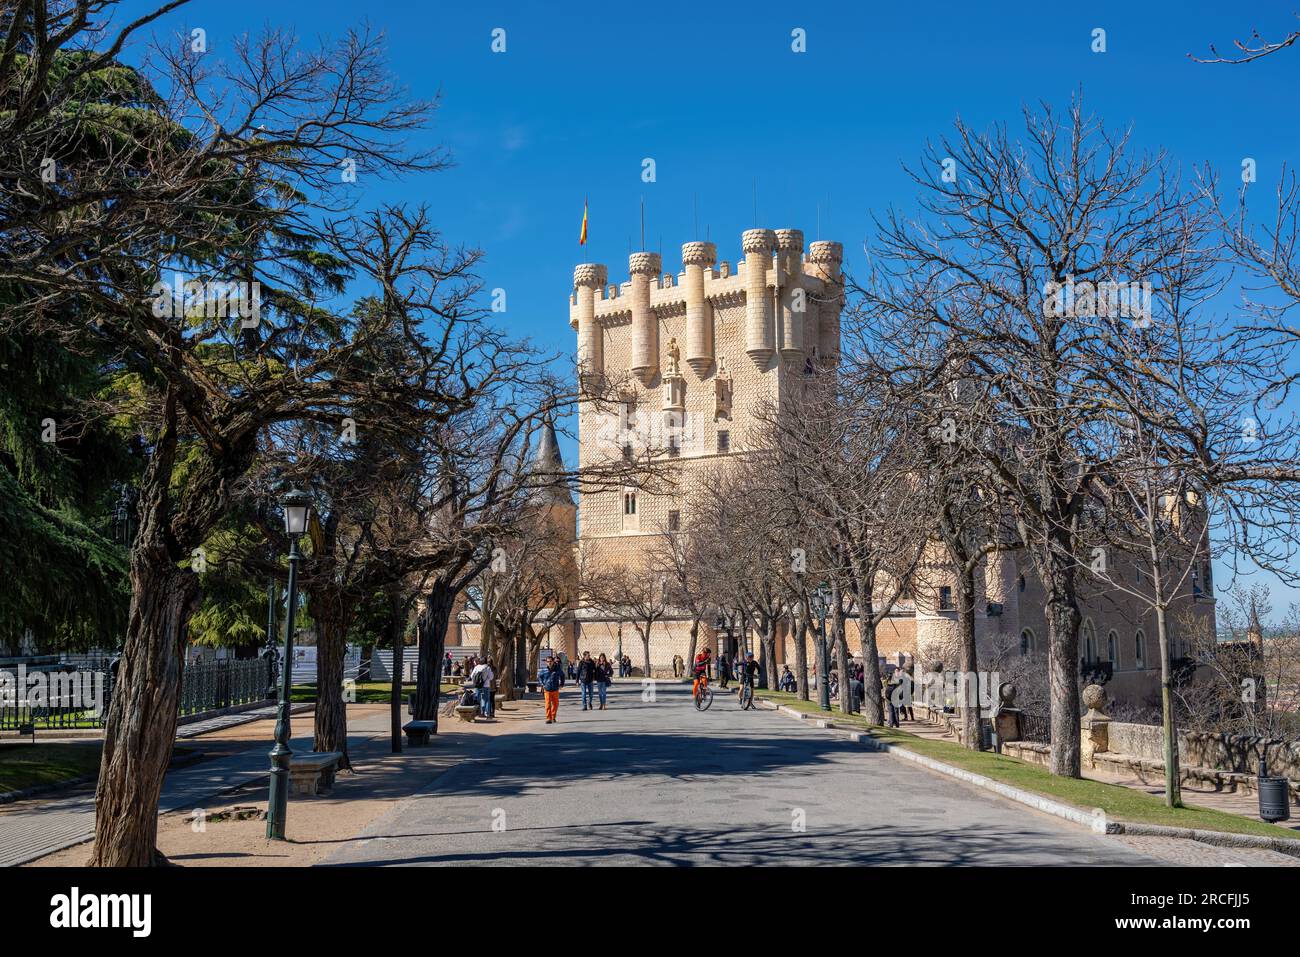 Alcazar von Segovia - Segovia, Spanien Stockfoto